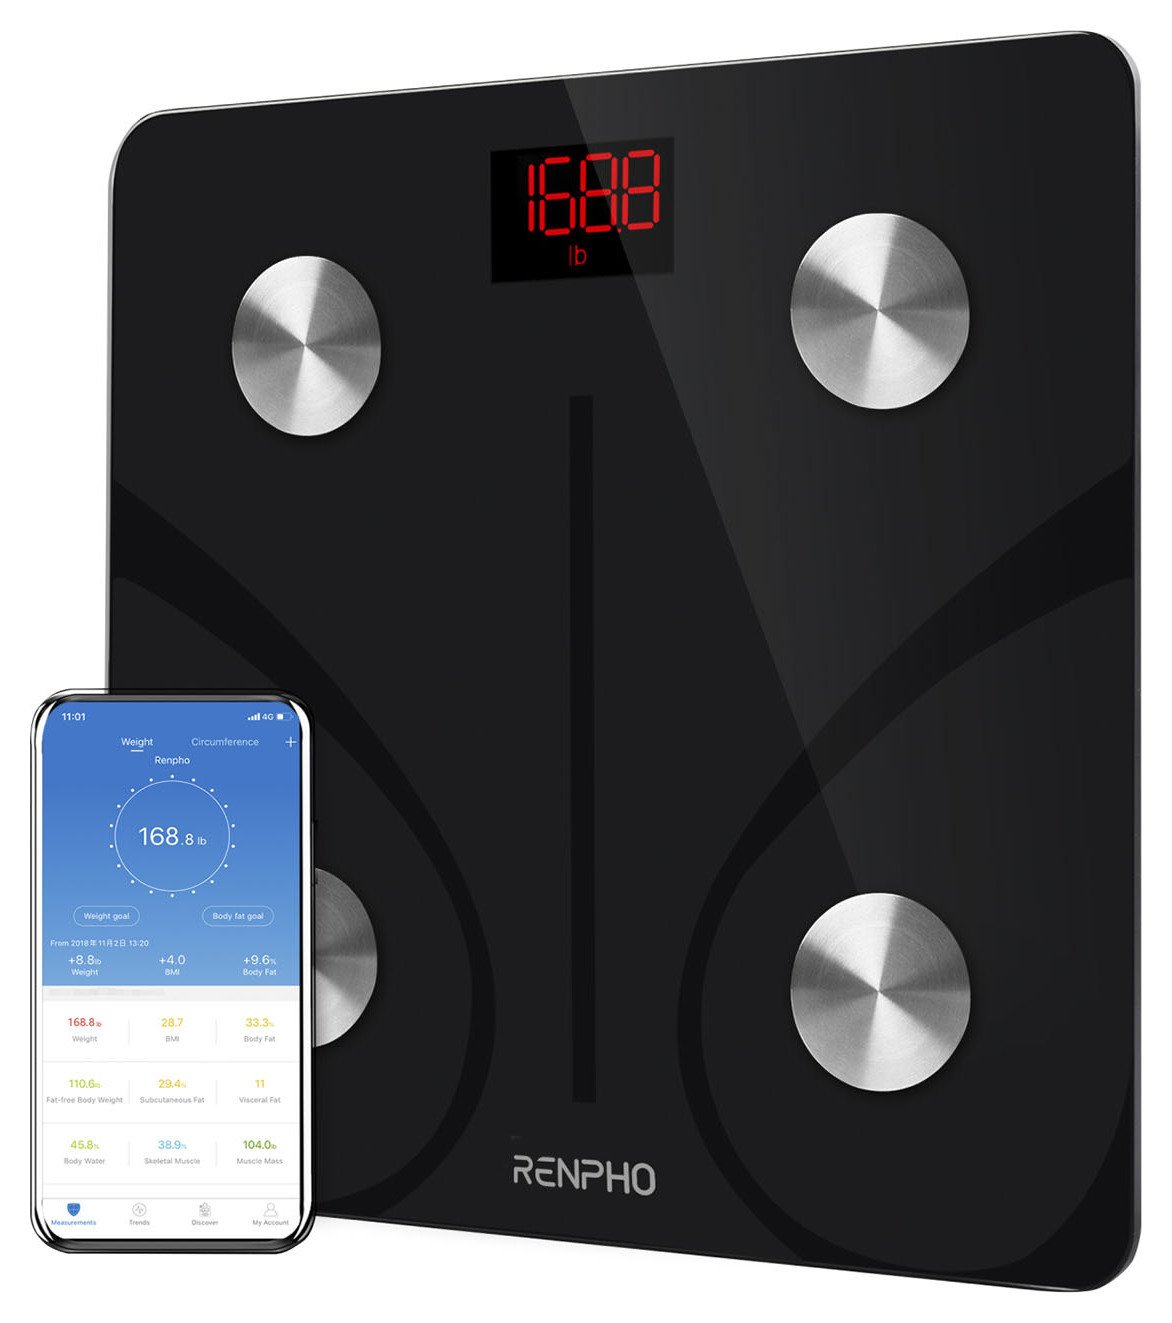 Renpho Smart Bathroom Scales - Black